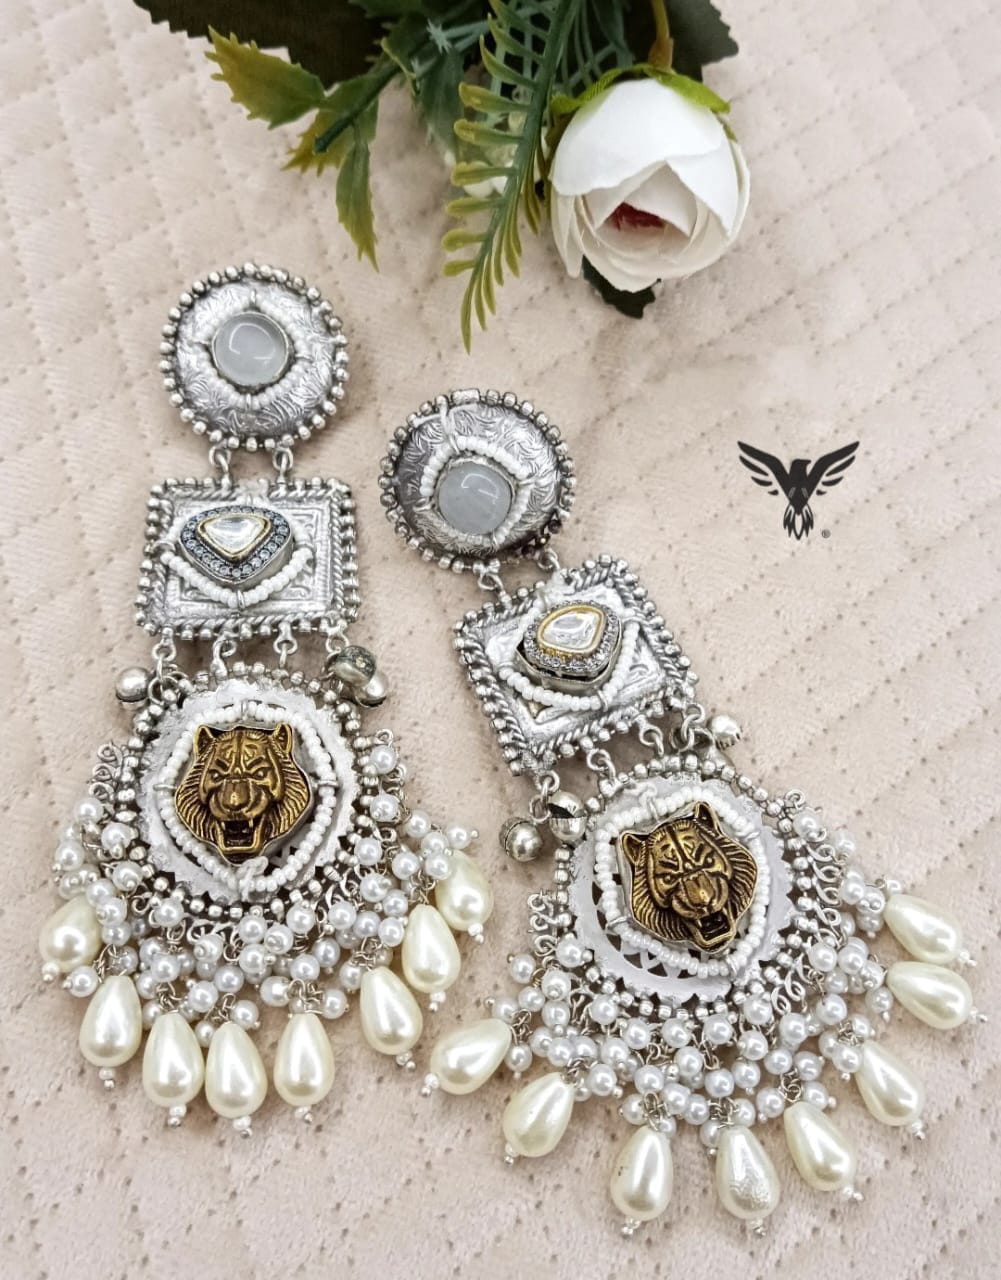 Sabyasachi inspired with polki silver look alike earrings for women